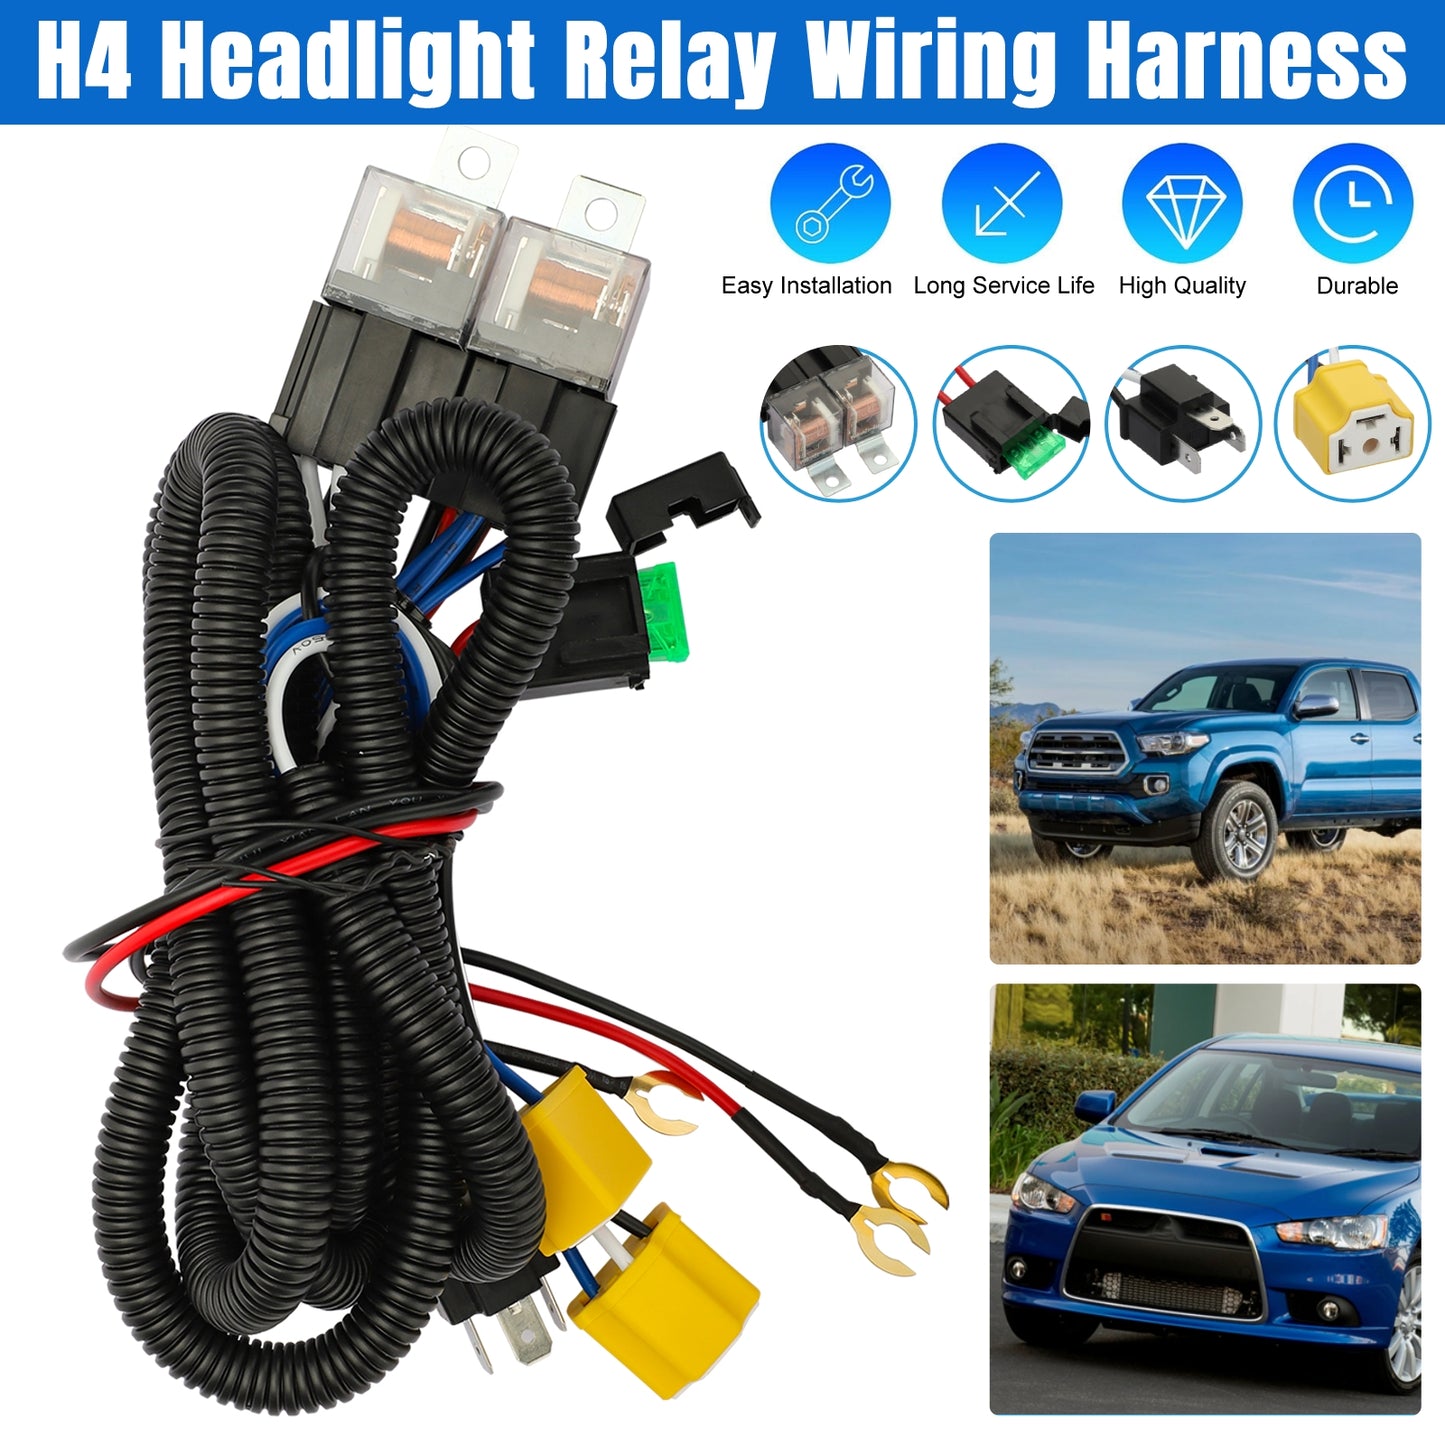 H4 LED Headlight Brightness Intensifier Wiring Harness